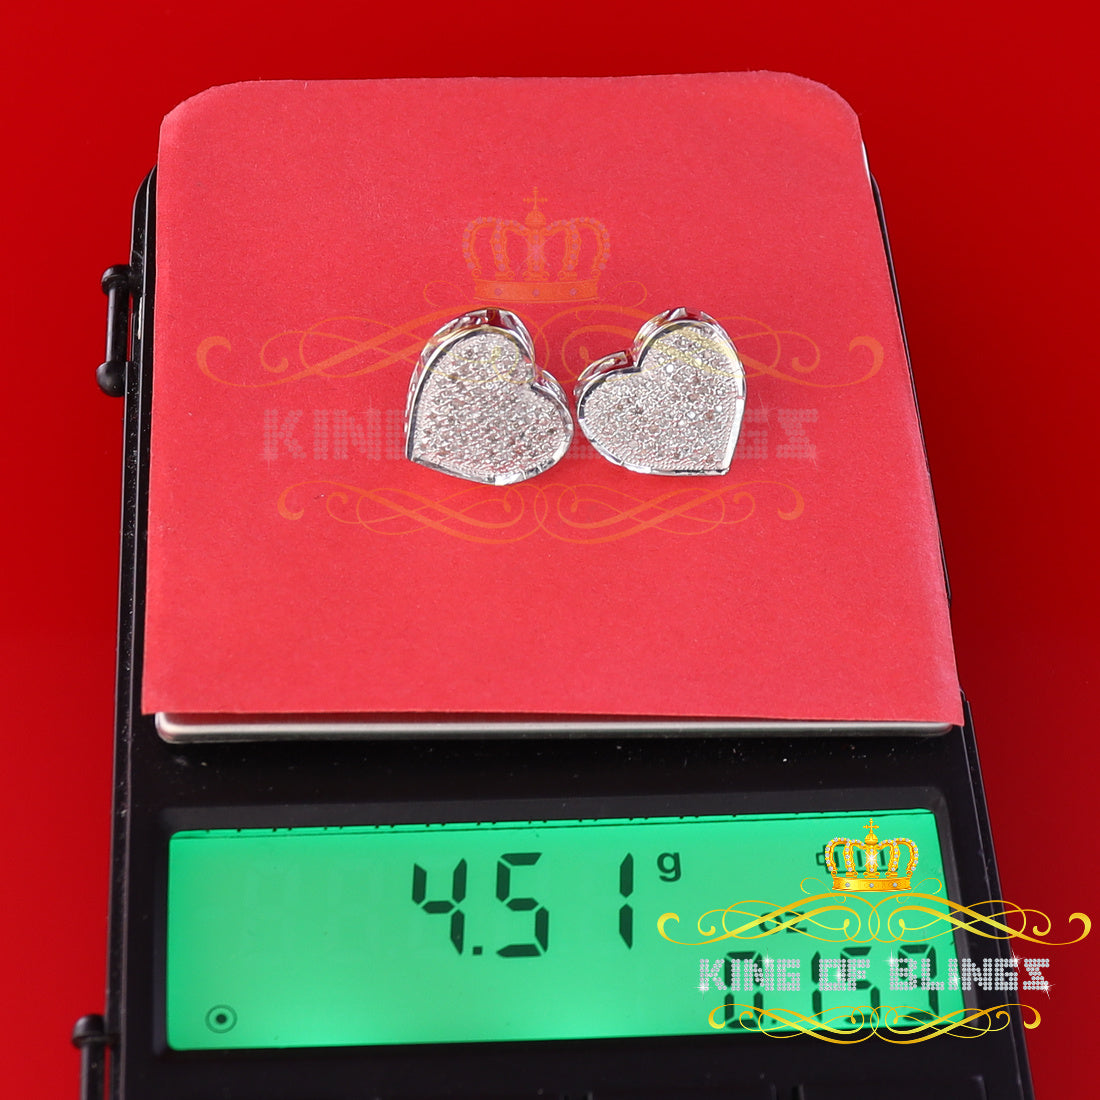 King Of Bling's Micro Pave 0.33ct Real Diamonds 925 White Silver Women's & Men's Heart Earrings KING OF BLINGS